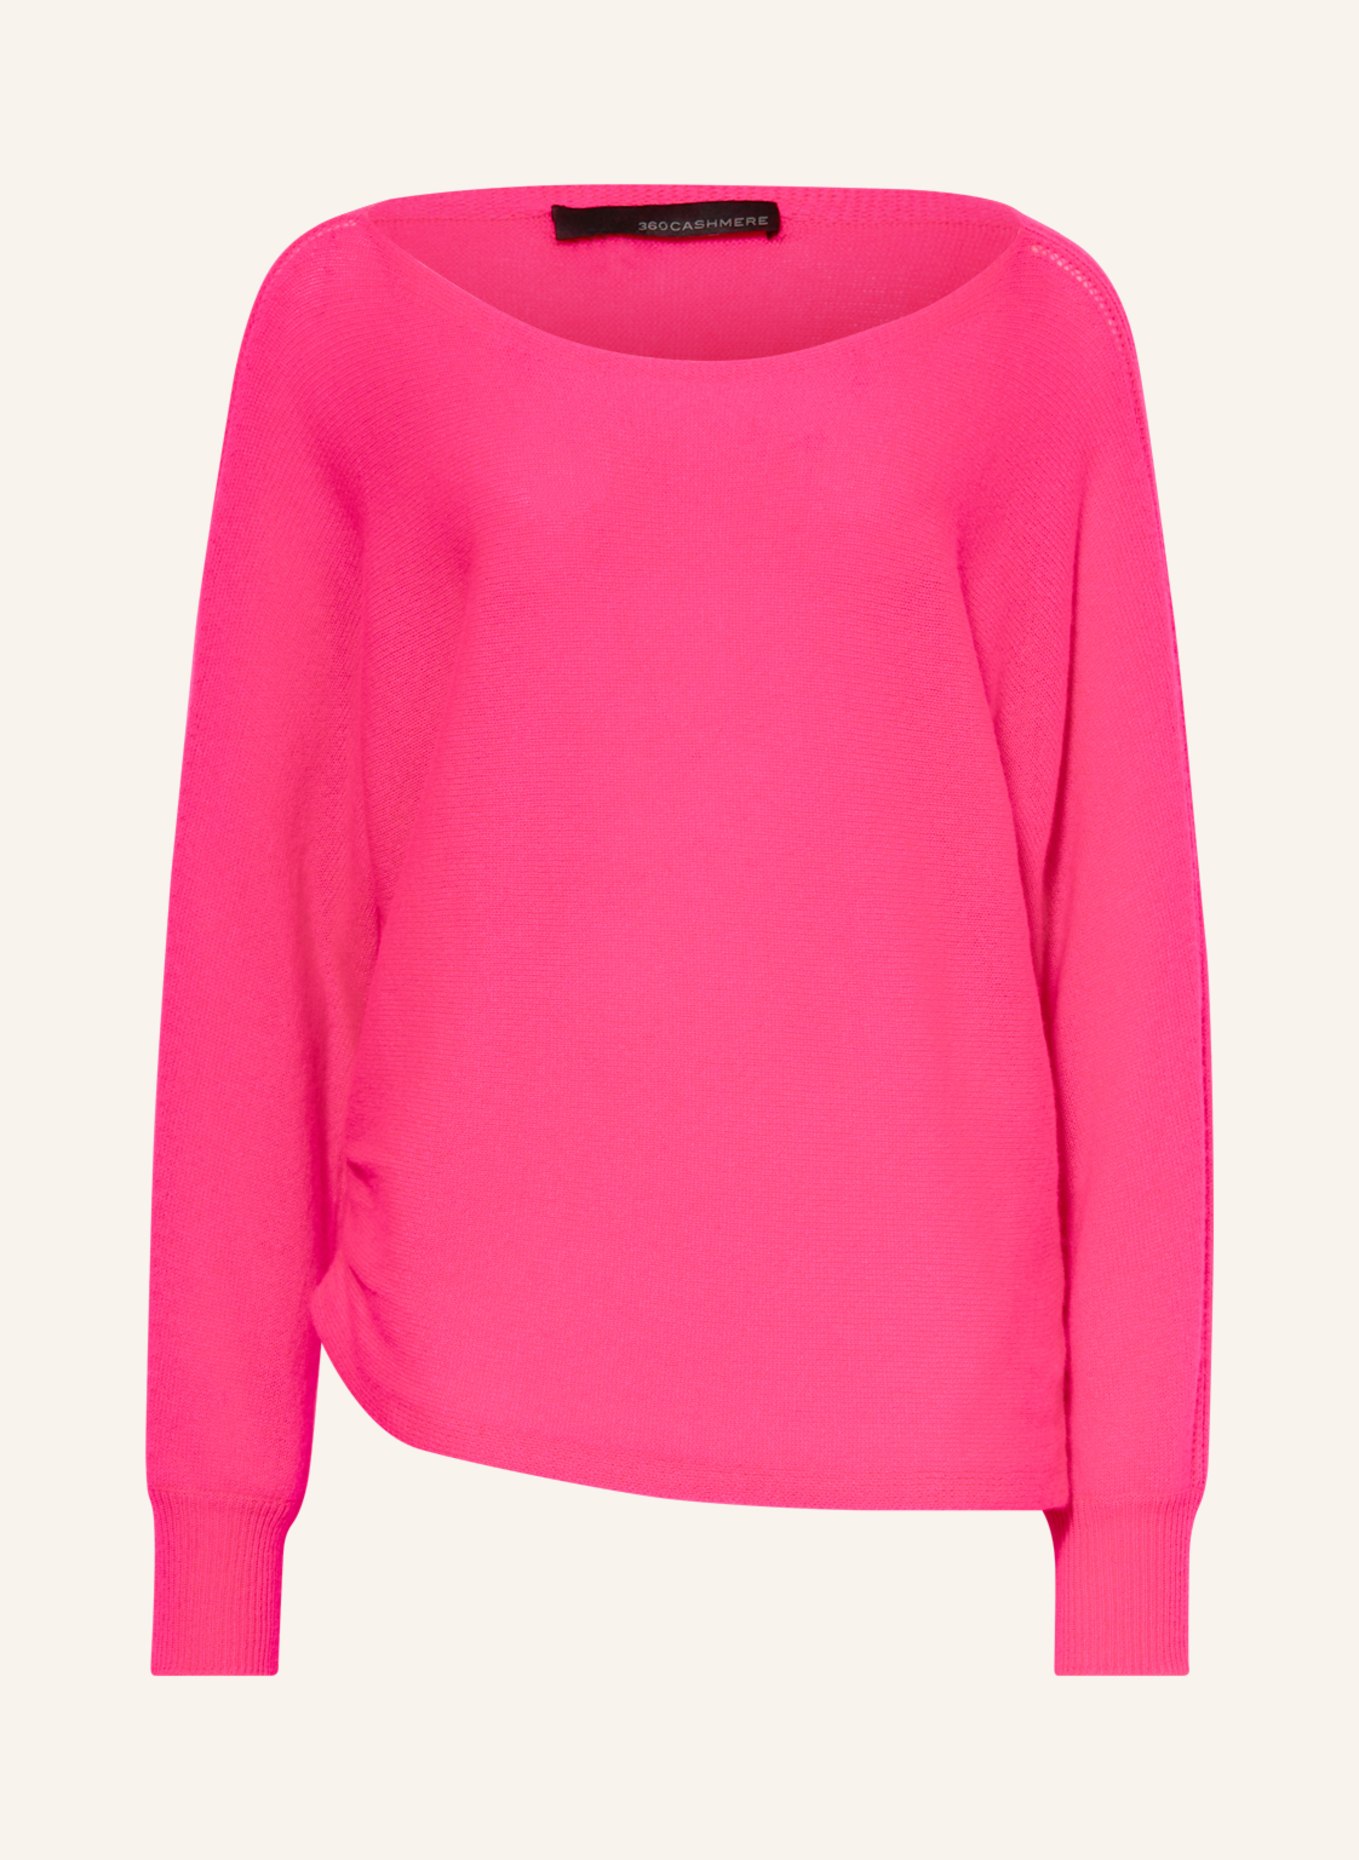 360CASHMERE Cashmere-Pullover MARYLIN, Farbe: PINK (Bild 1)